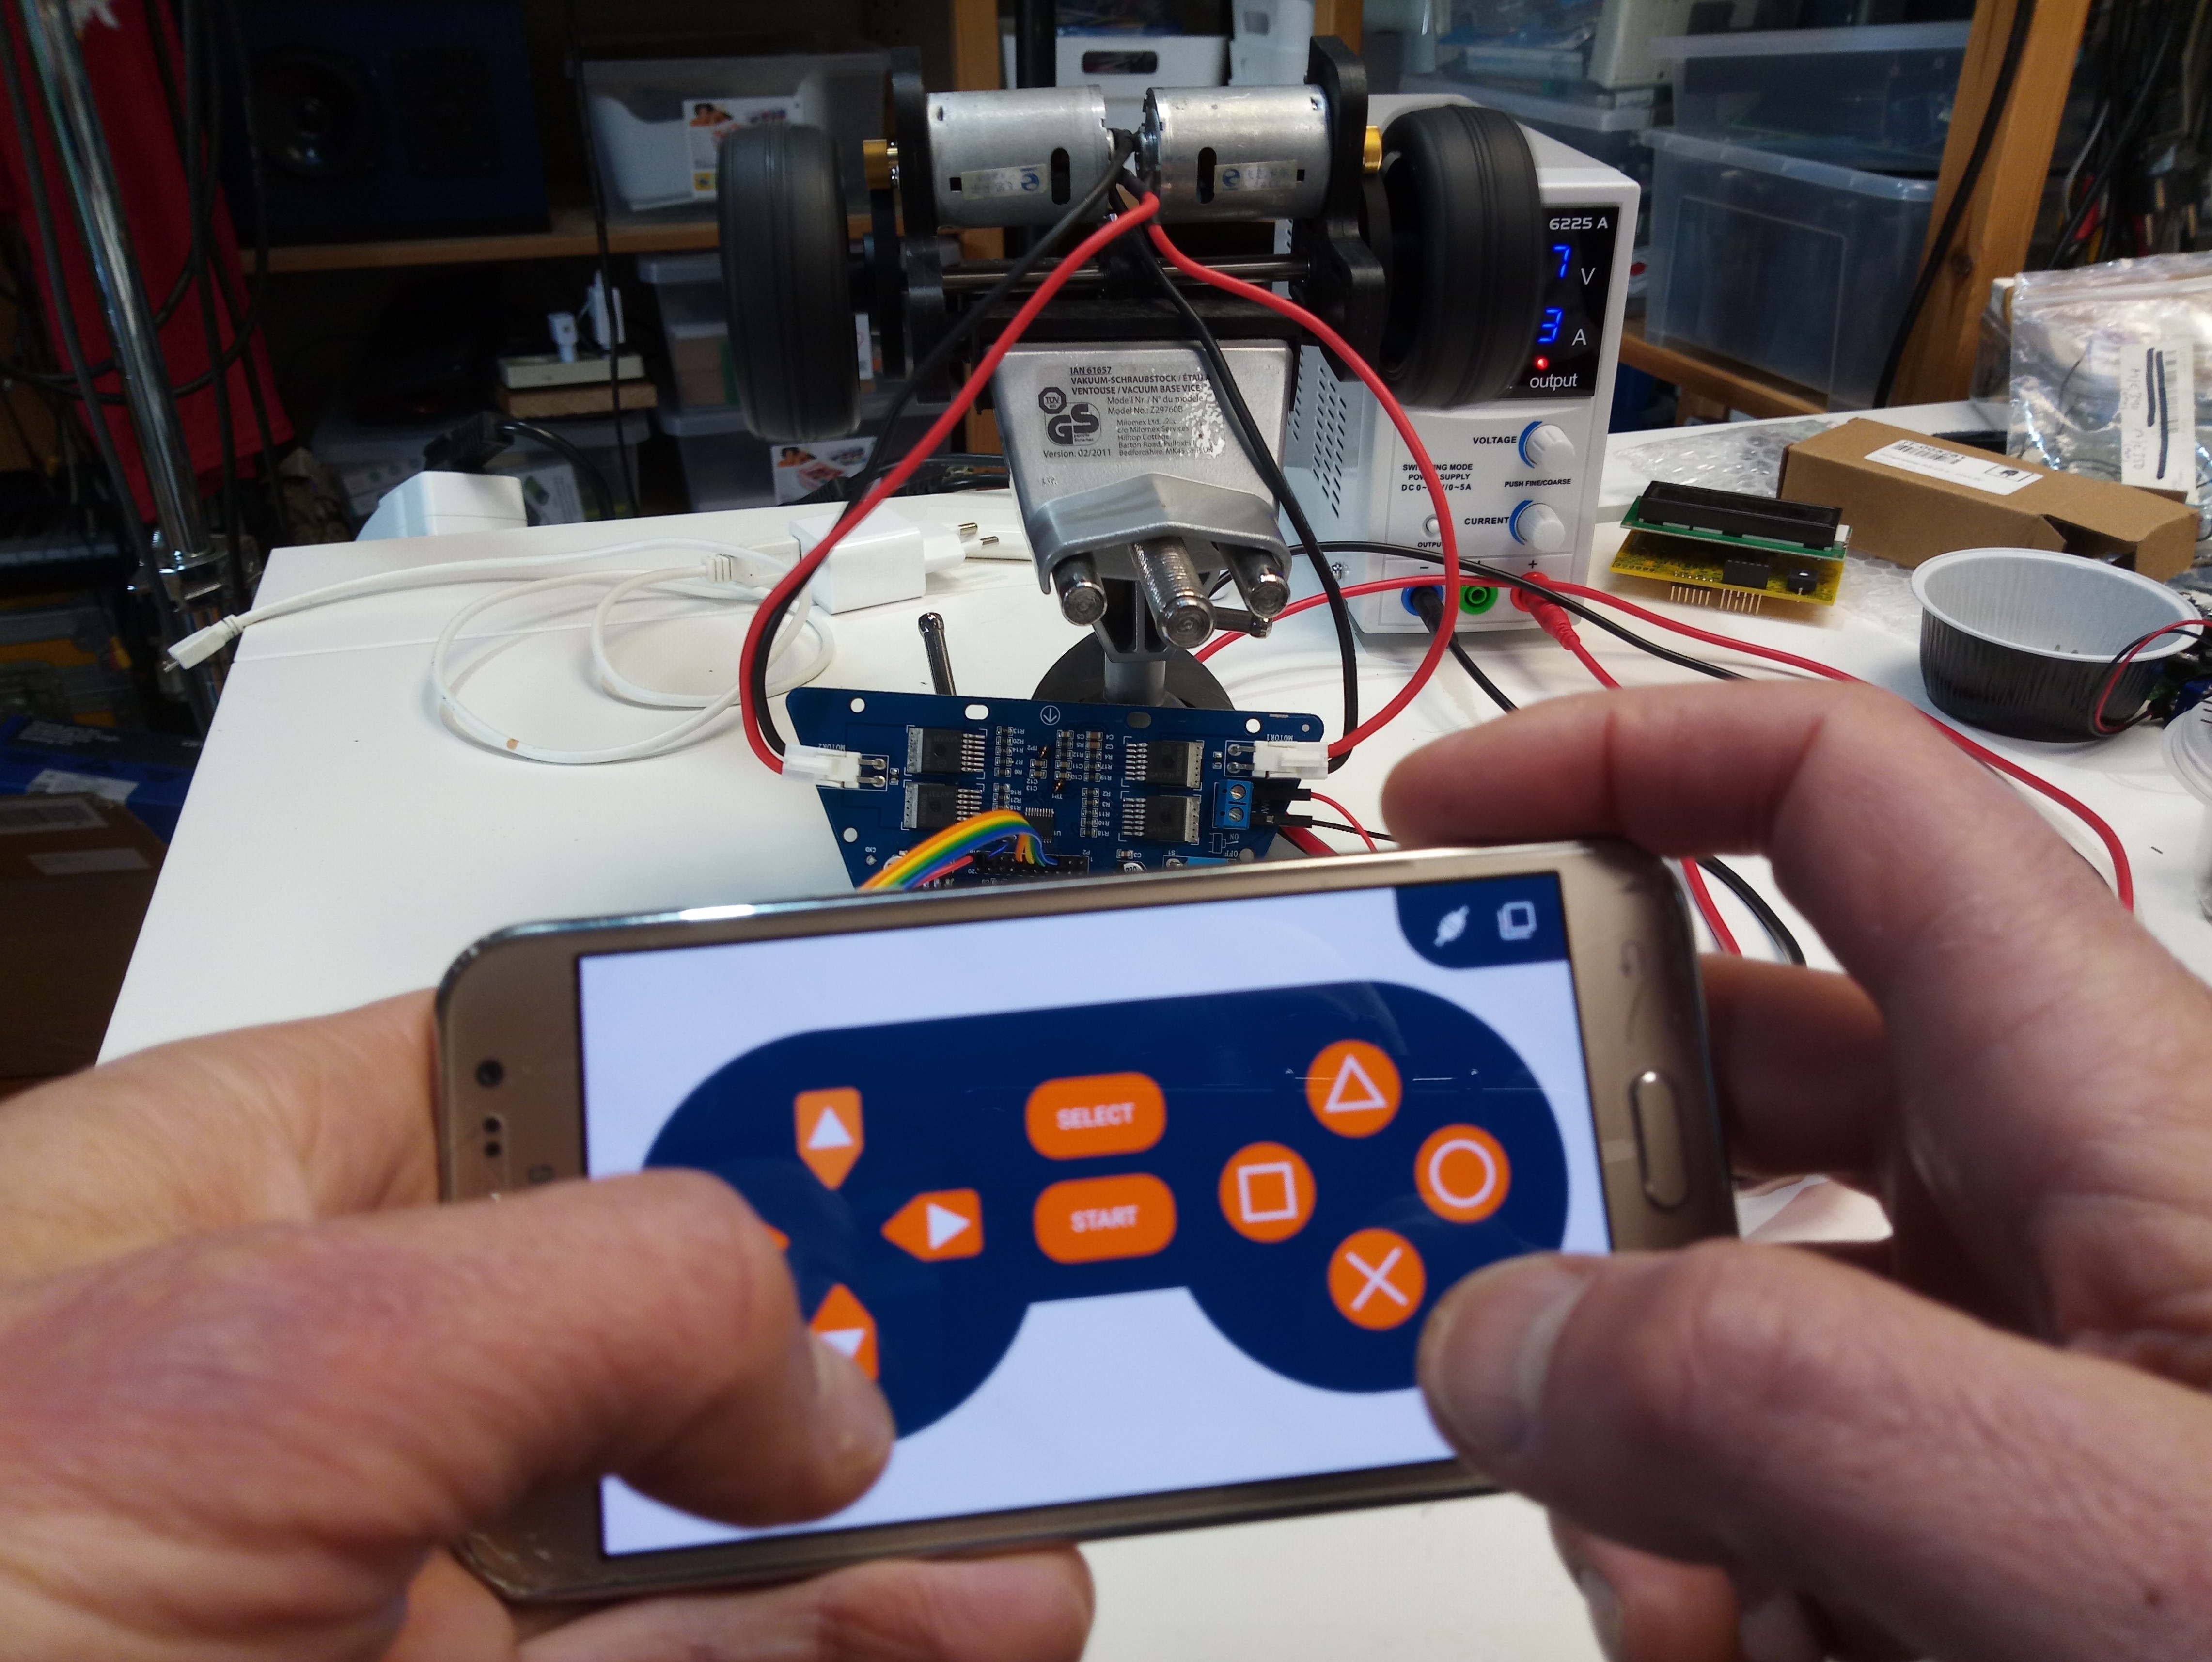 Dabble-based smartphone remote control. Autonomous Vehicle with 2D Lidar